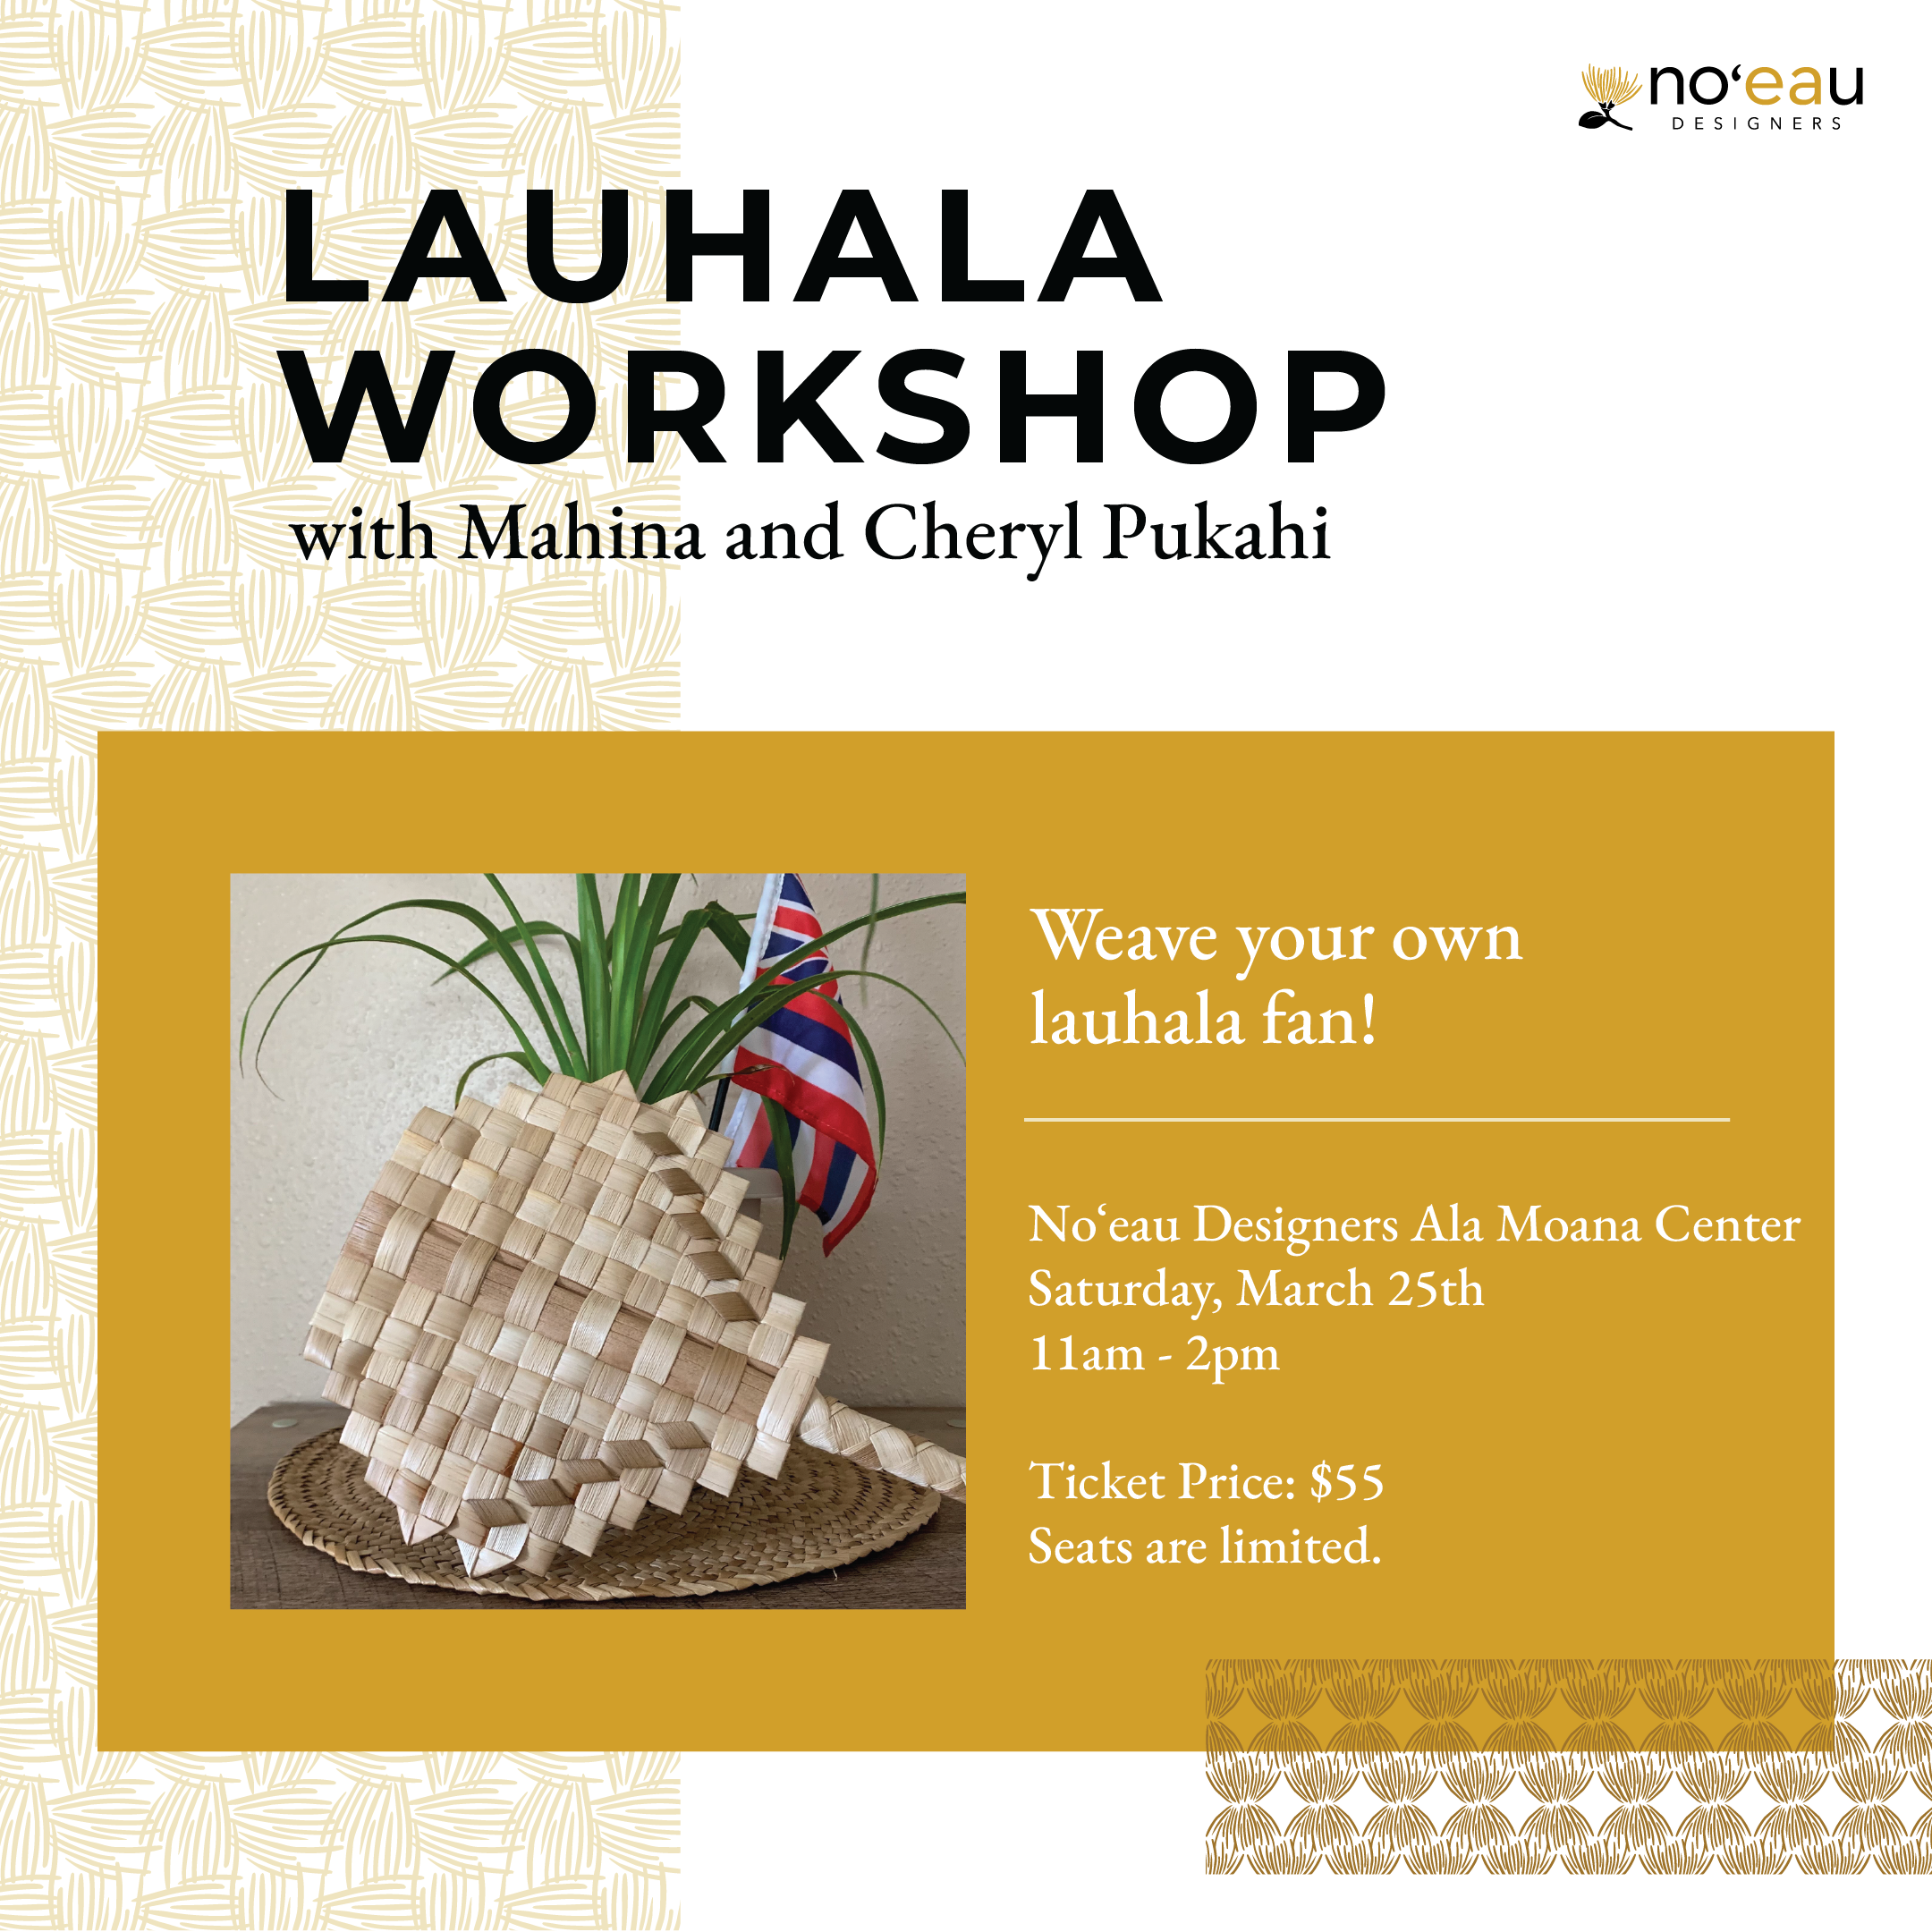 Lauhala Workshop: Lauhala Fan from No'eau Designers